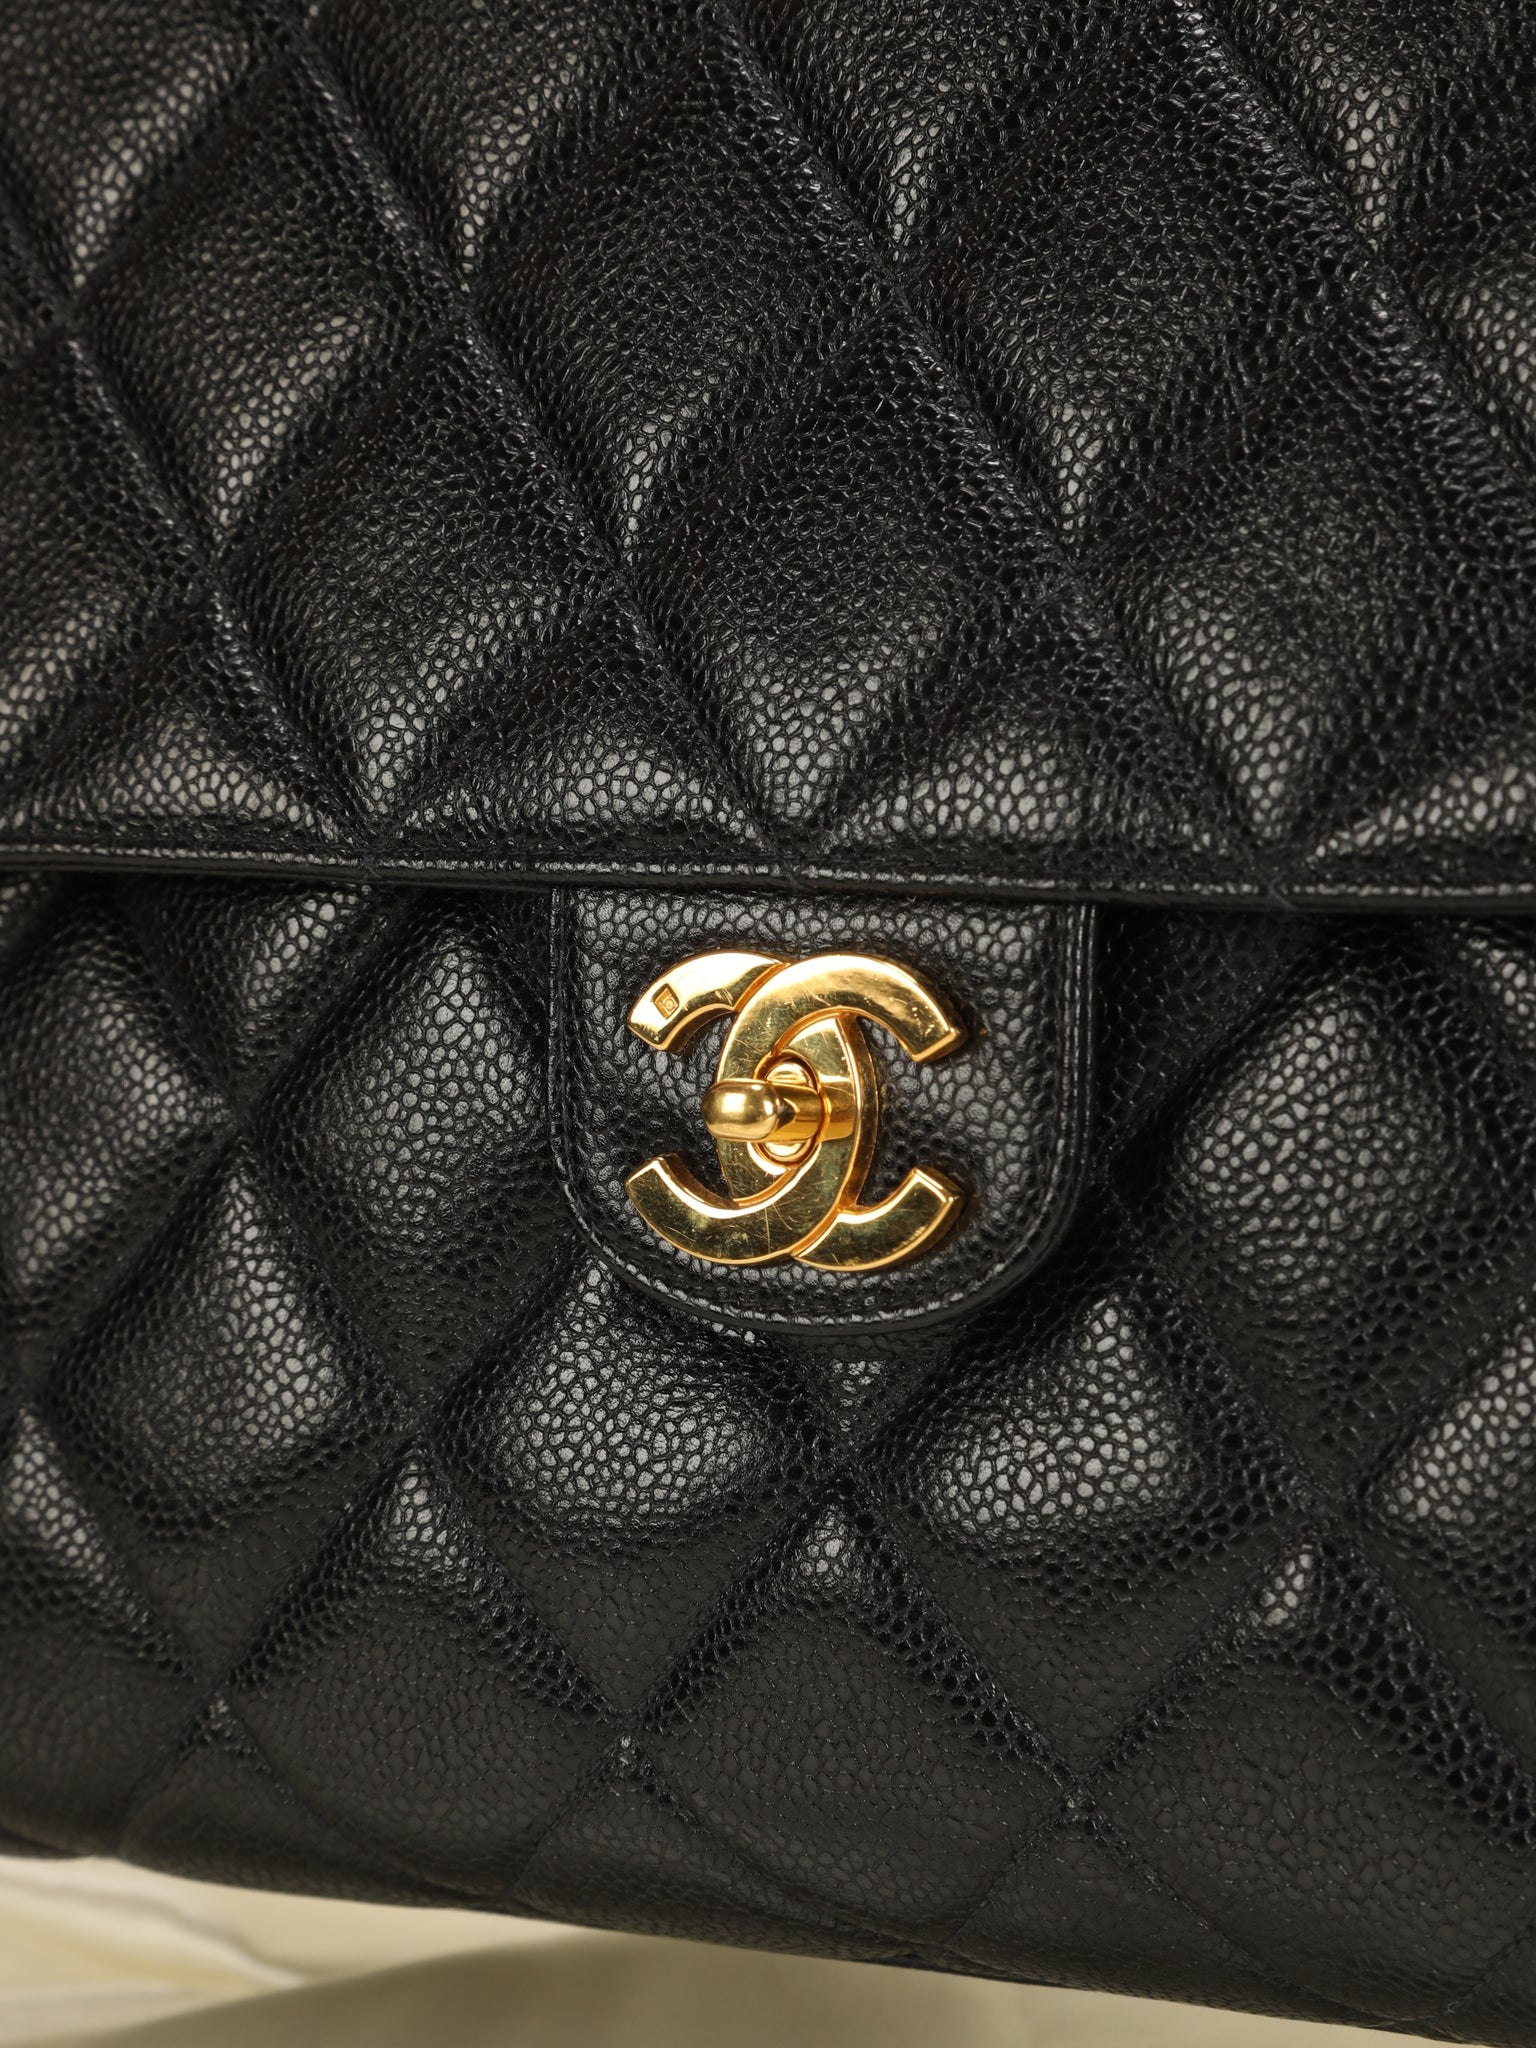 Chanel Caviar Top Handle Flap Bag